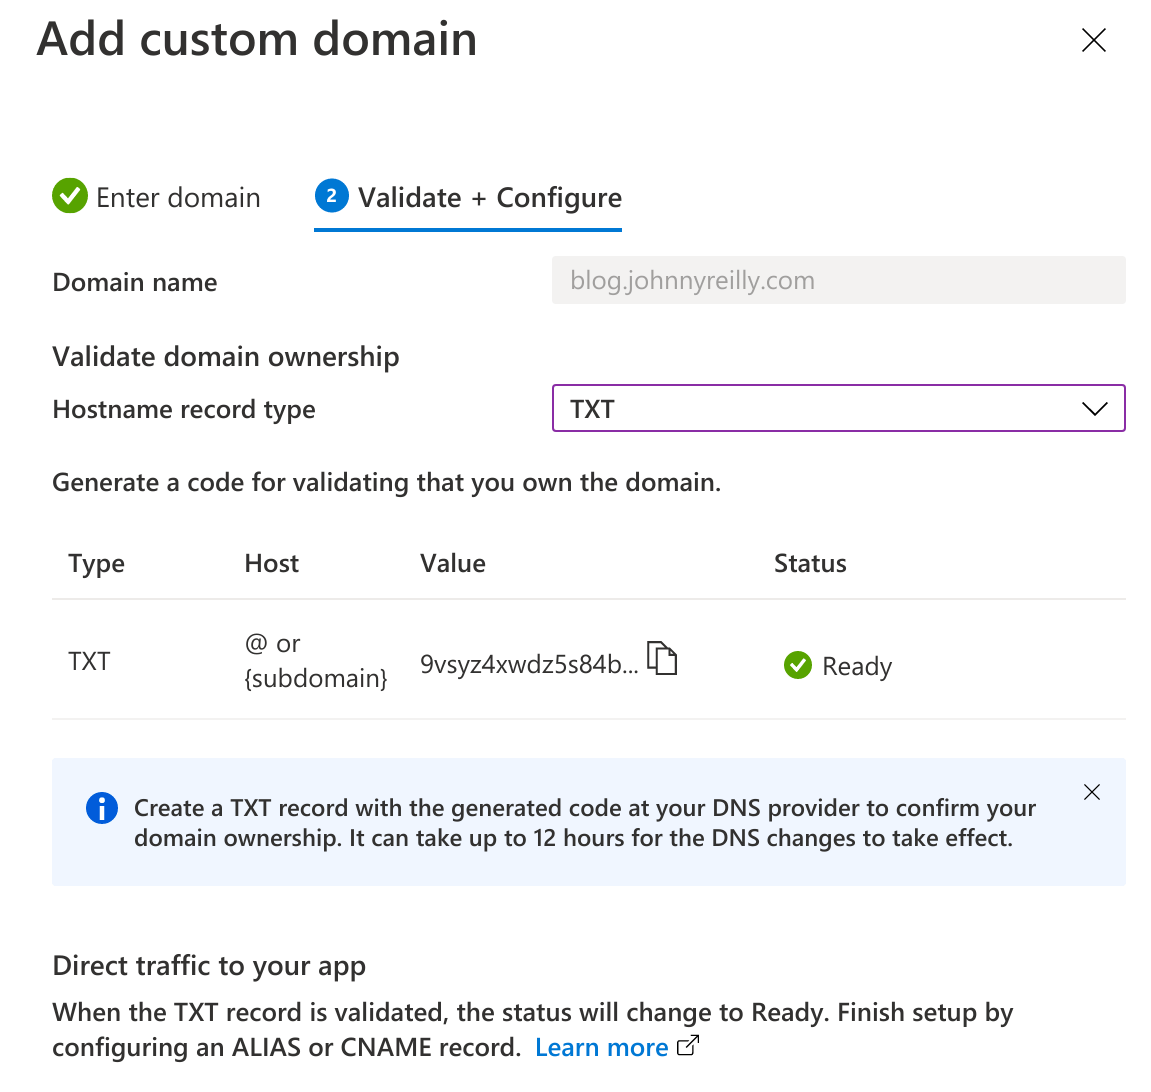 screenshot of the Azure Portal Add Custom Domain screen with domain validated